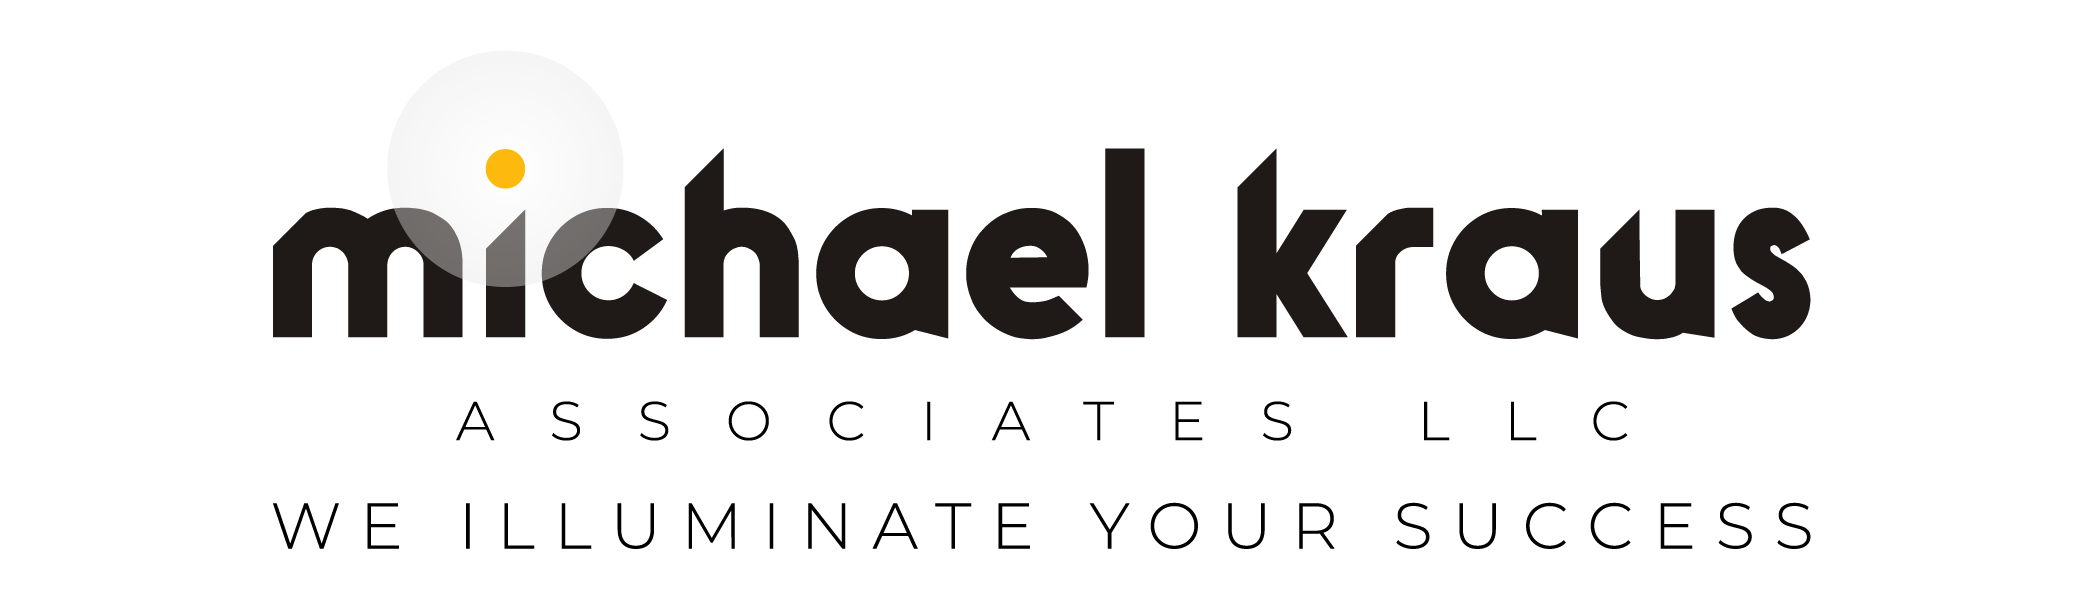 Welcome to Michael Kraus Associates LLC